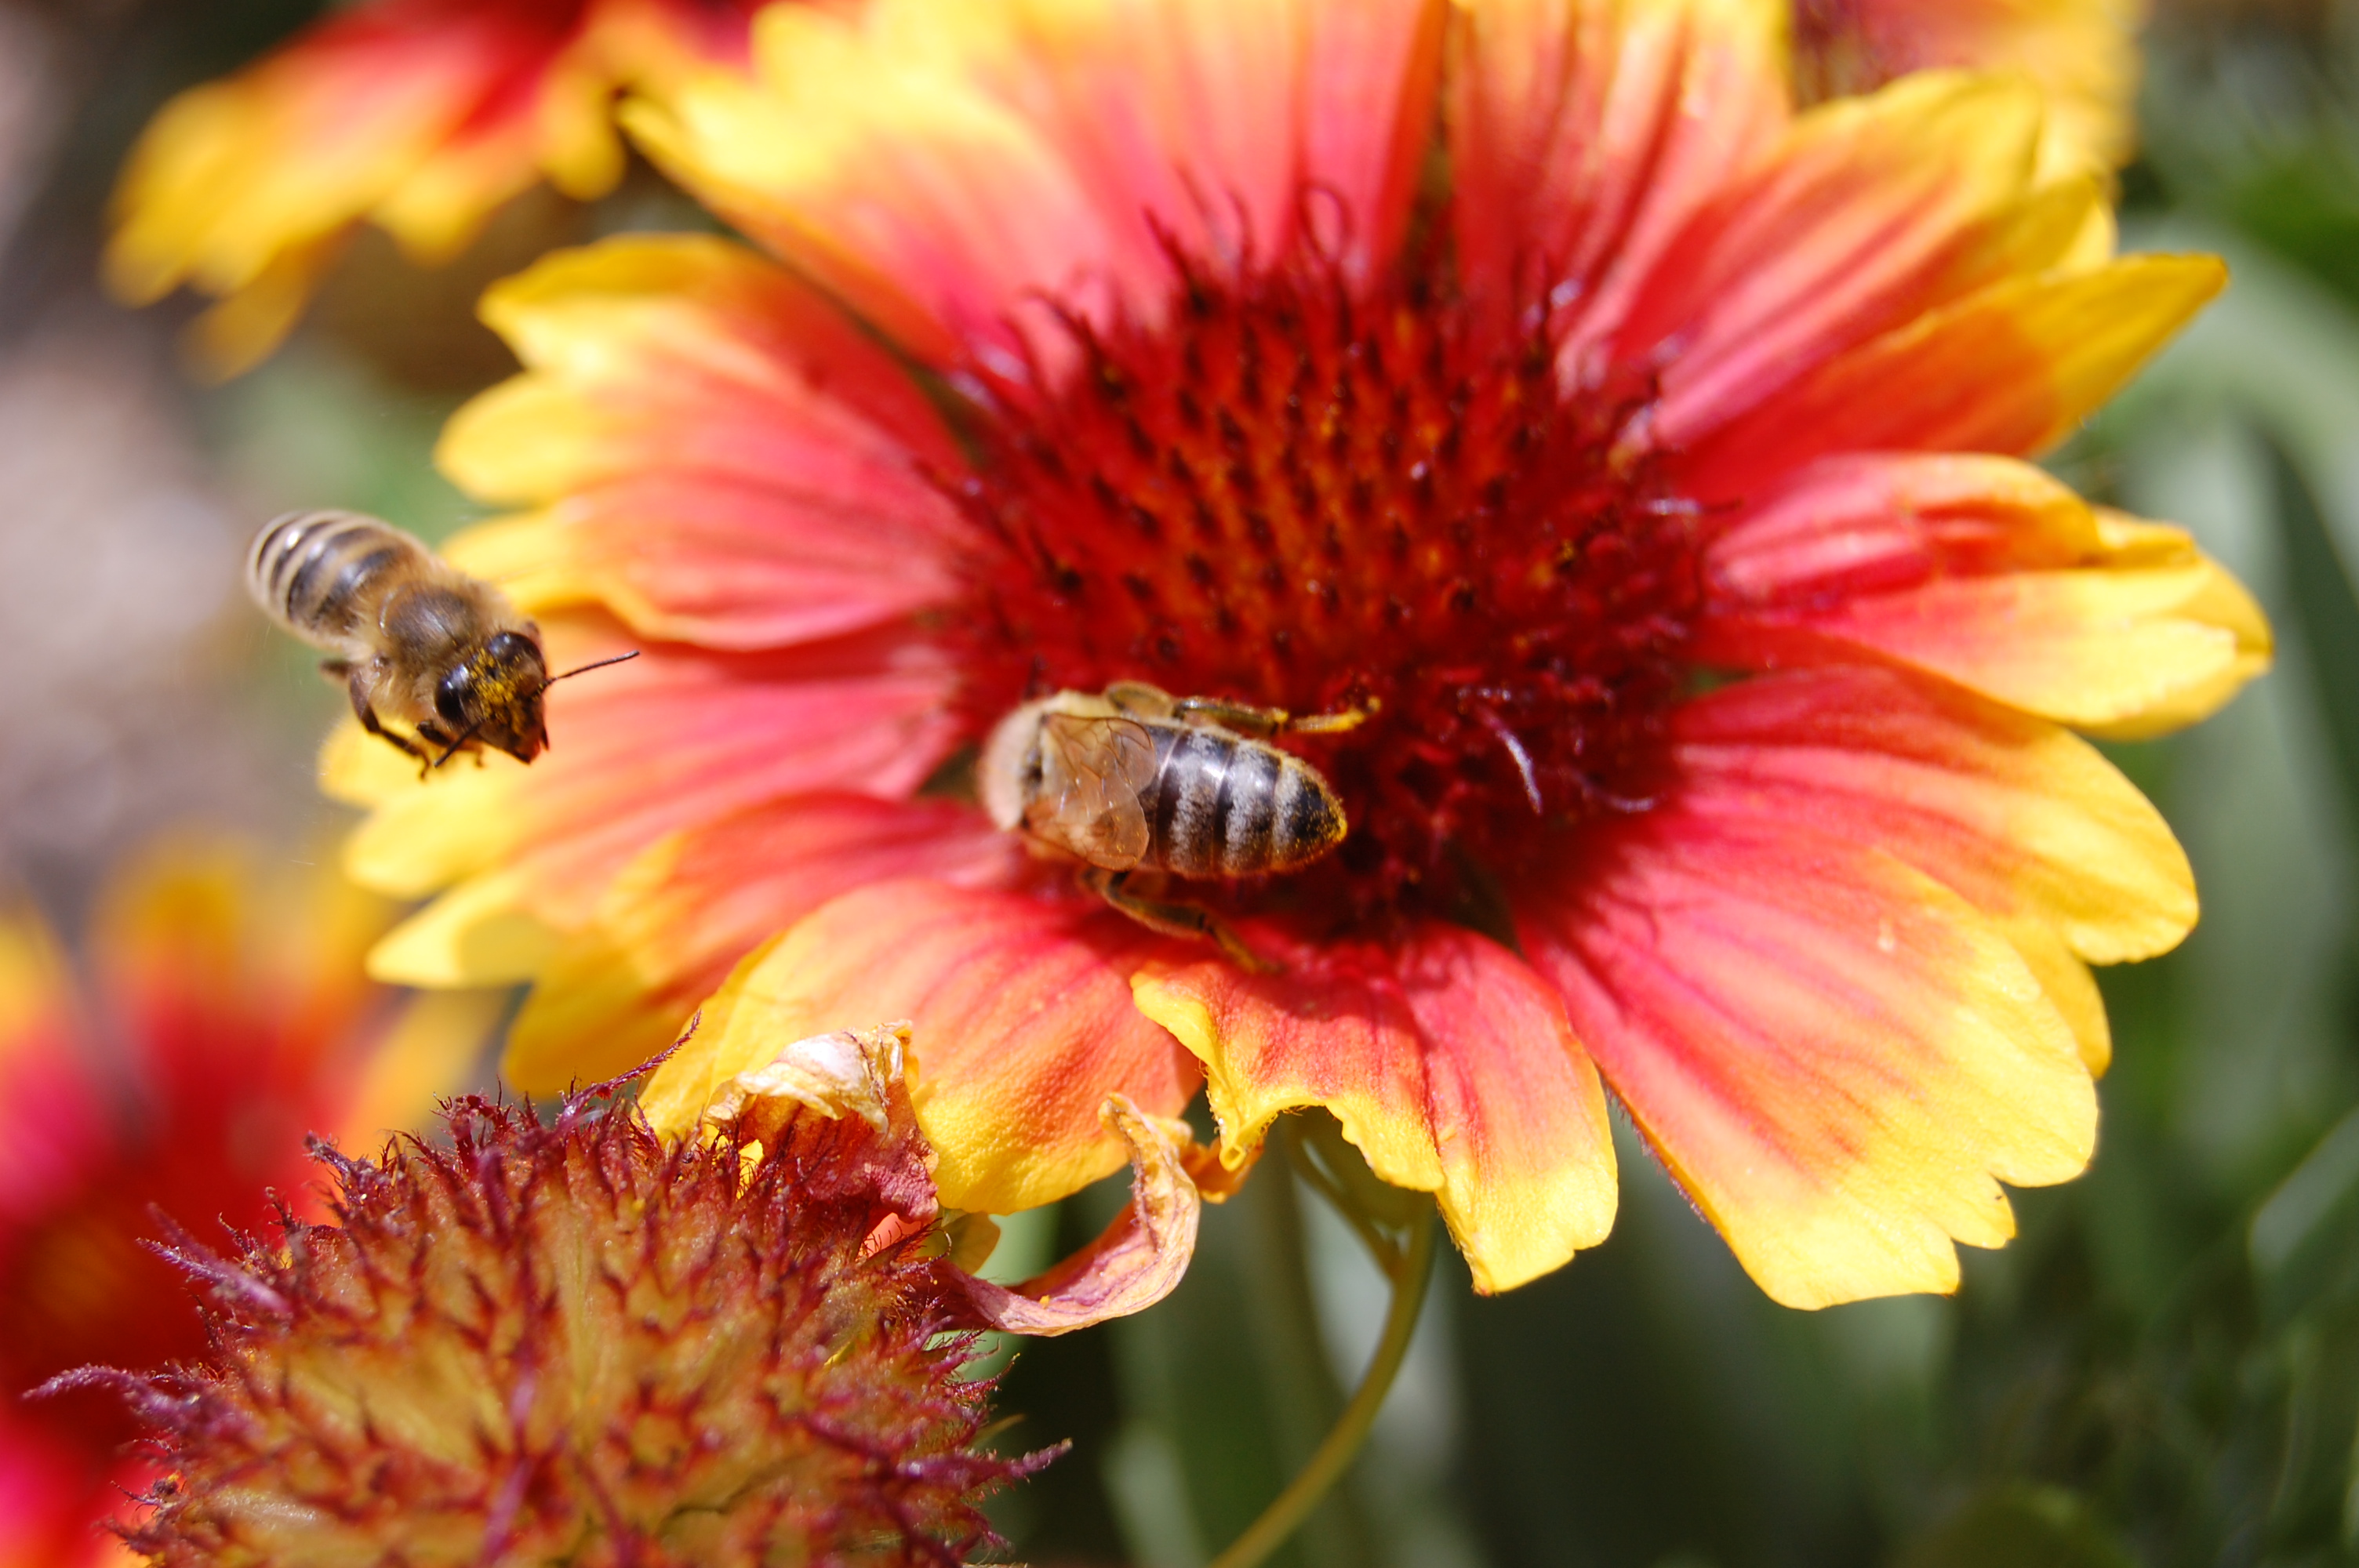 File:Bees on flower.jpg - Wikimedia Commons